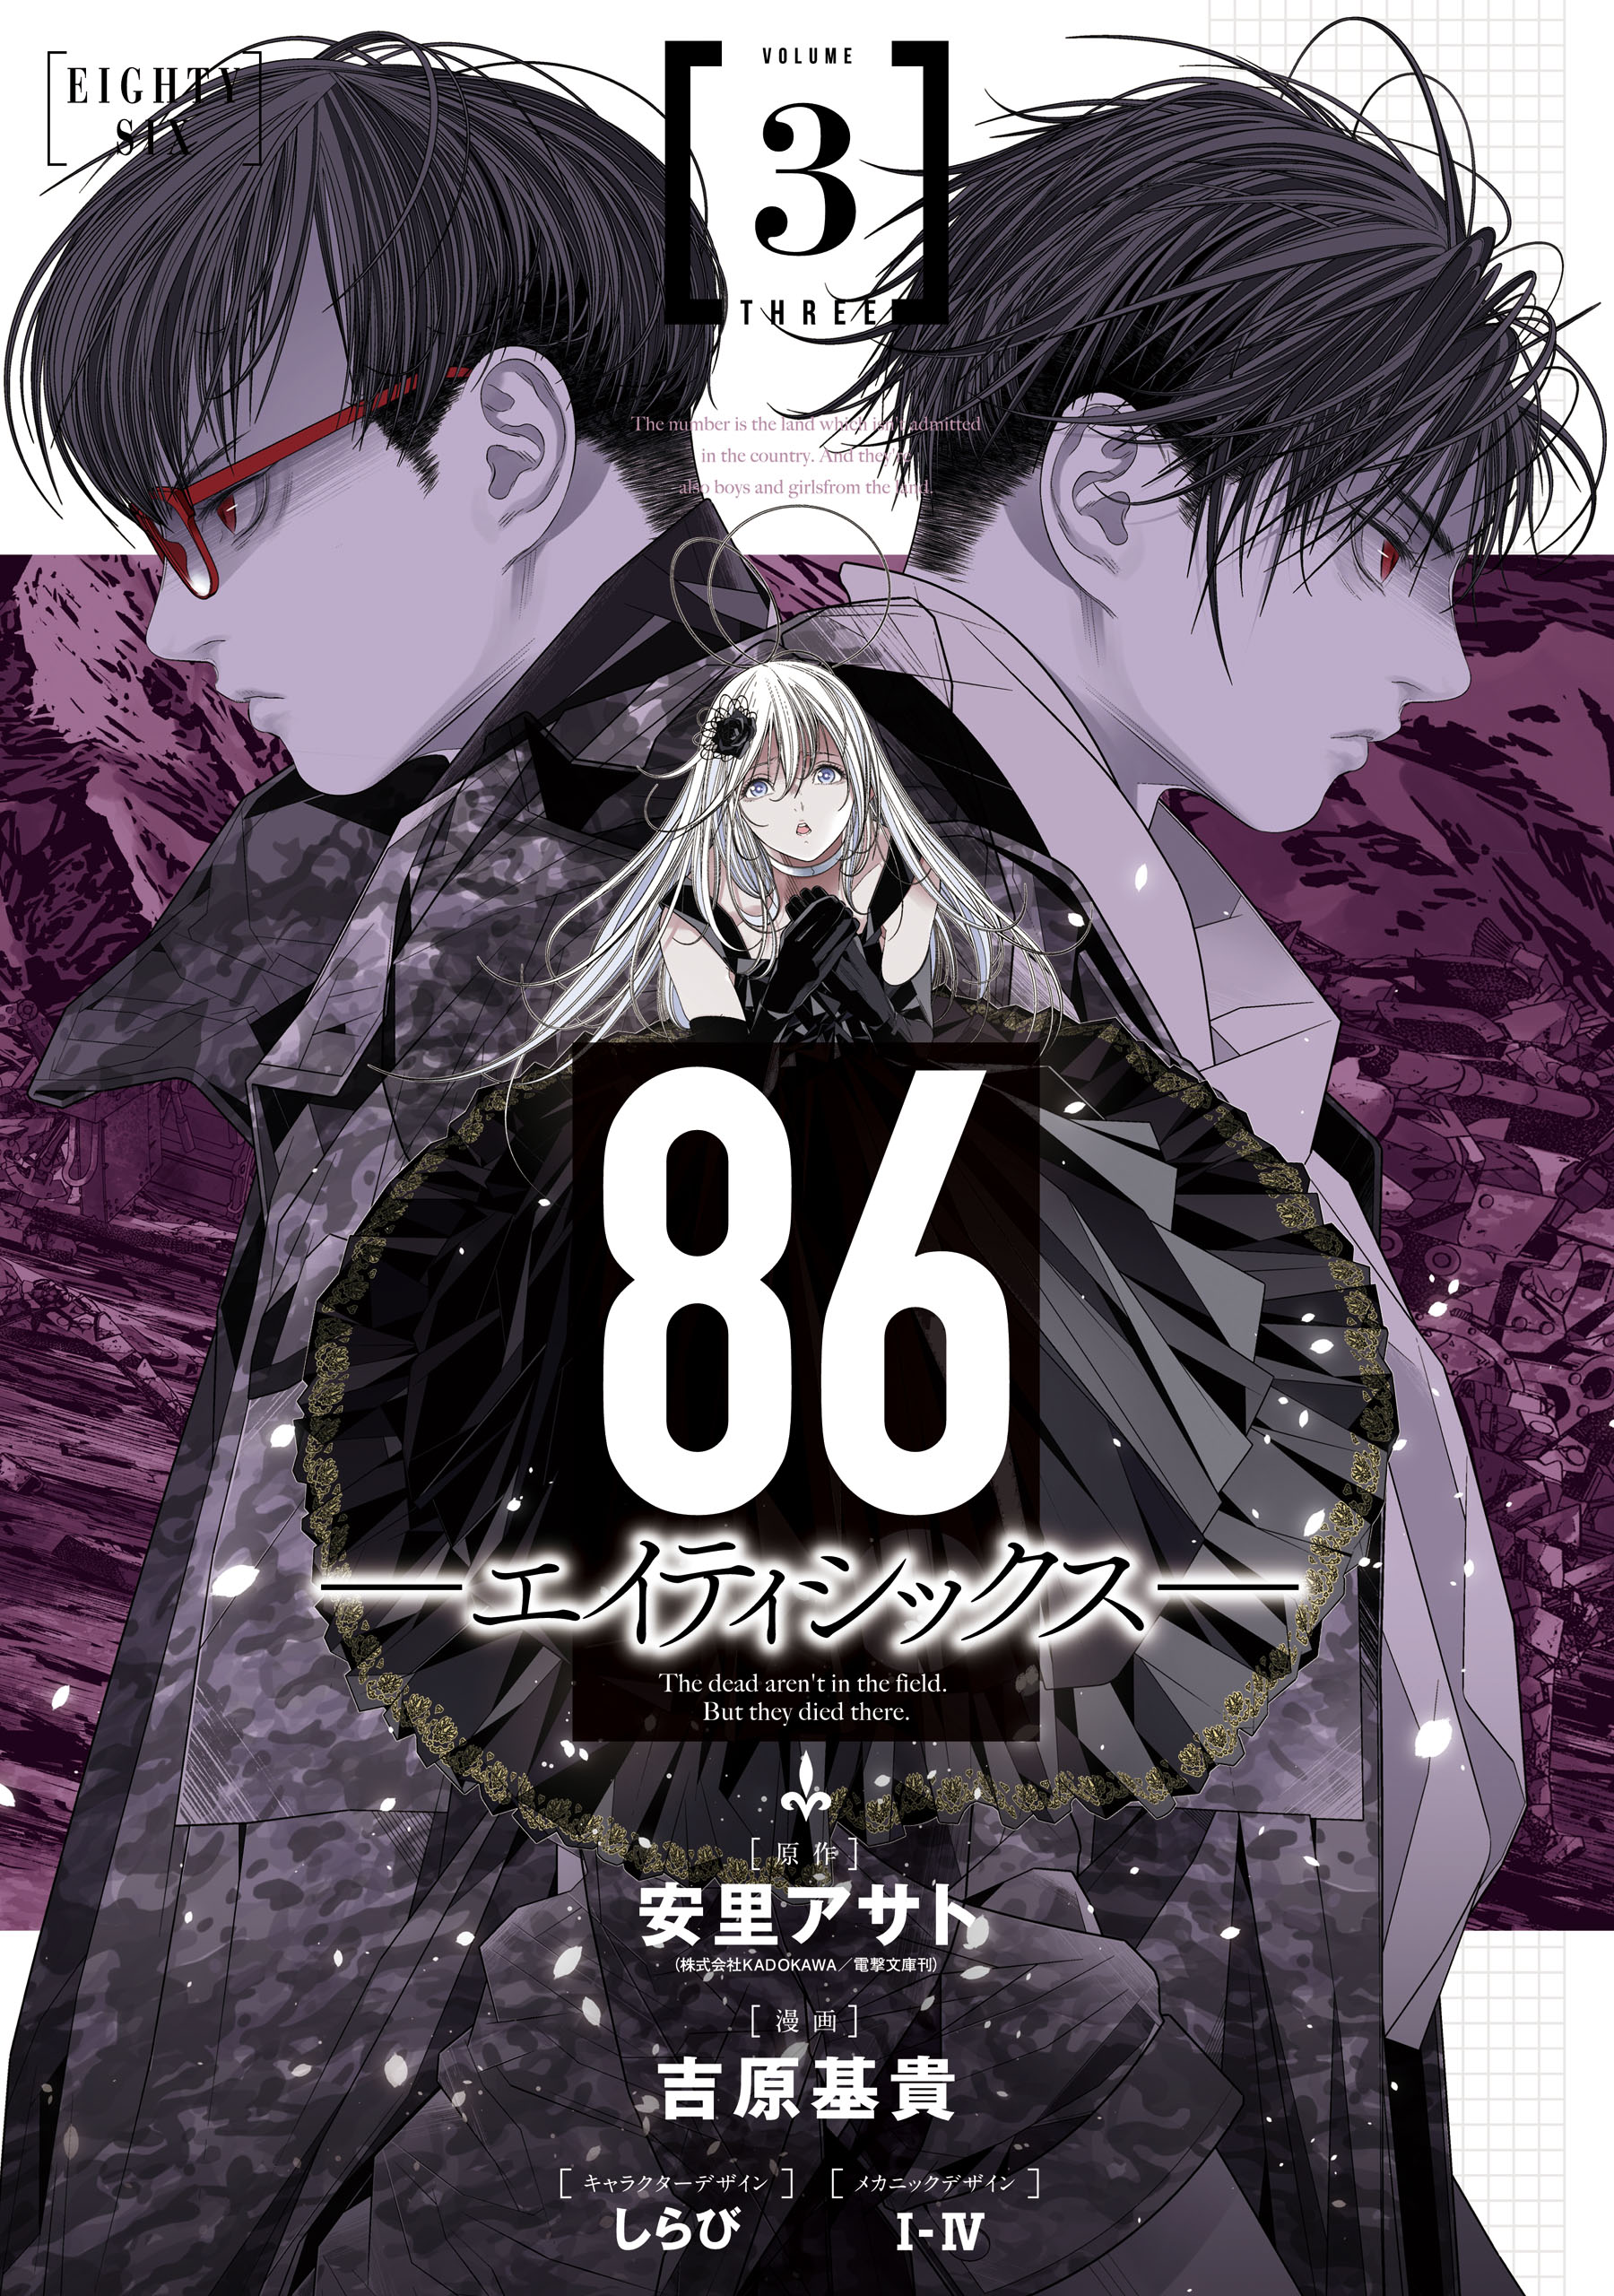 Manga Mogura RE on X: 86 - Eighty Six spin-off manga series 86